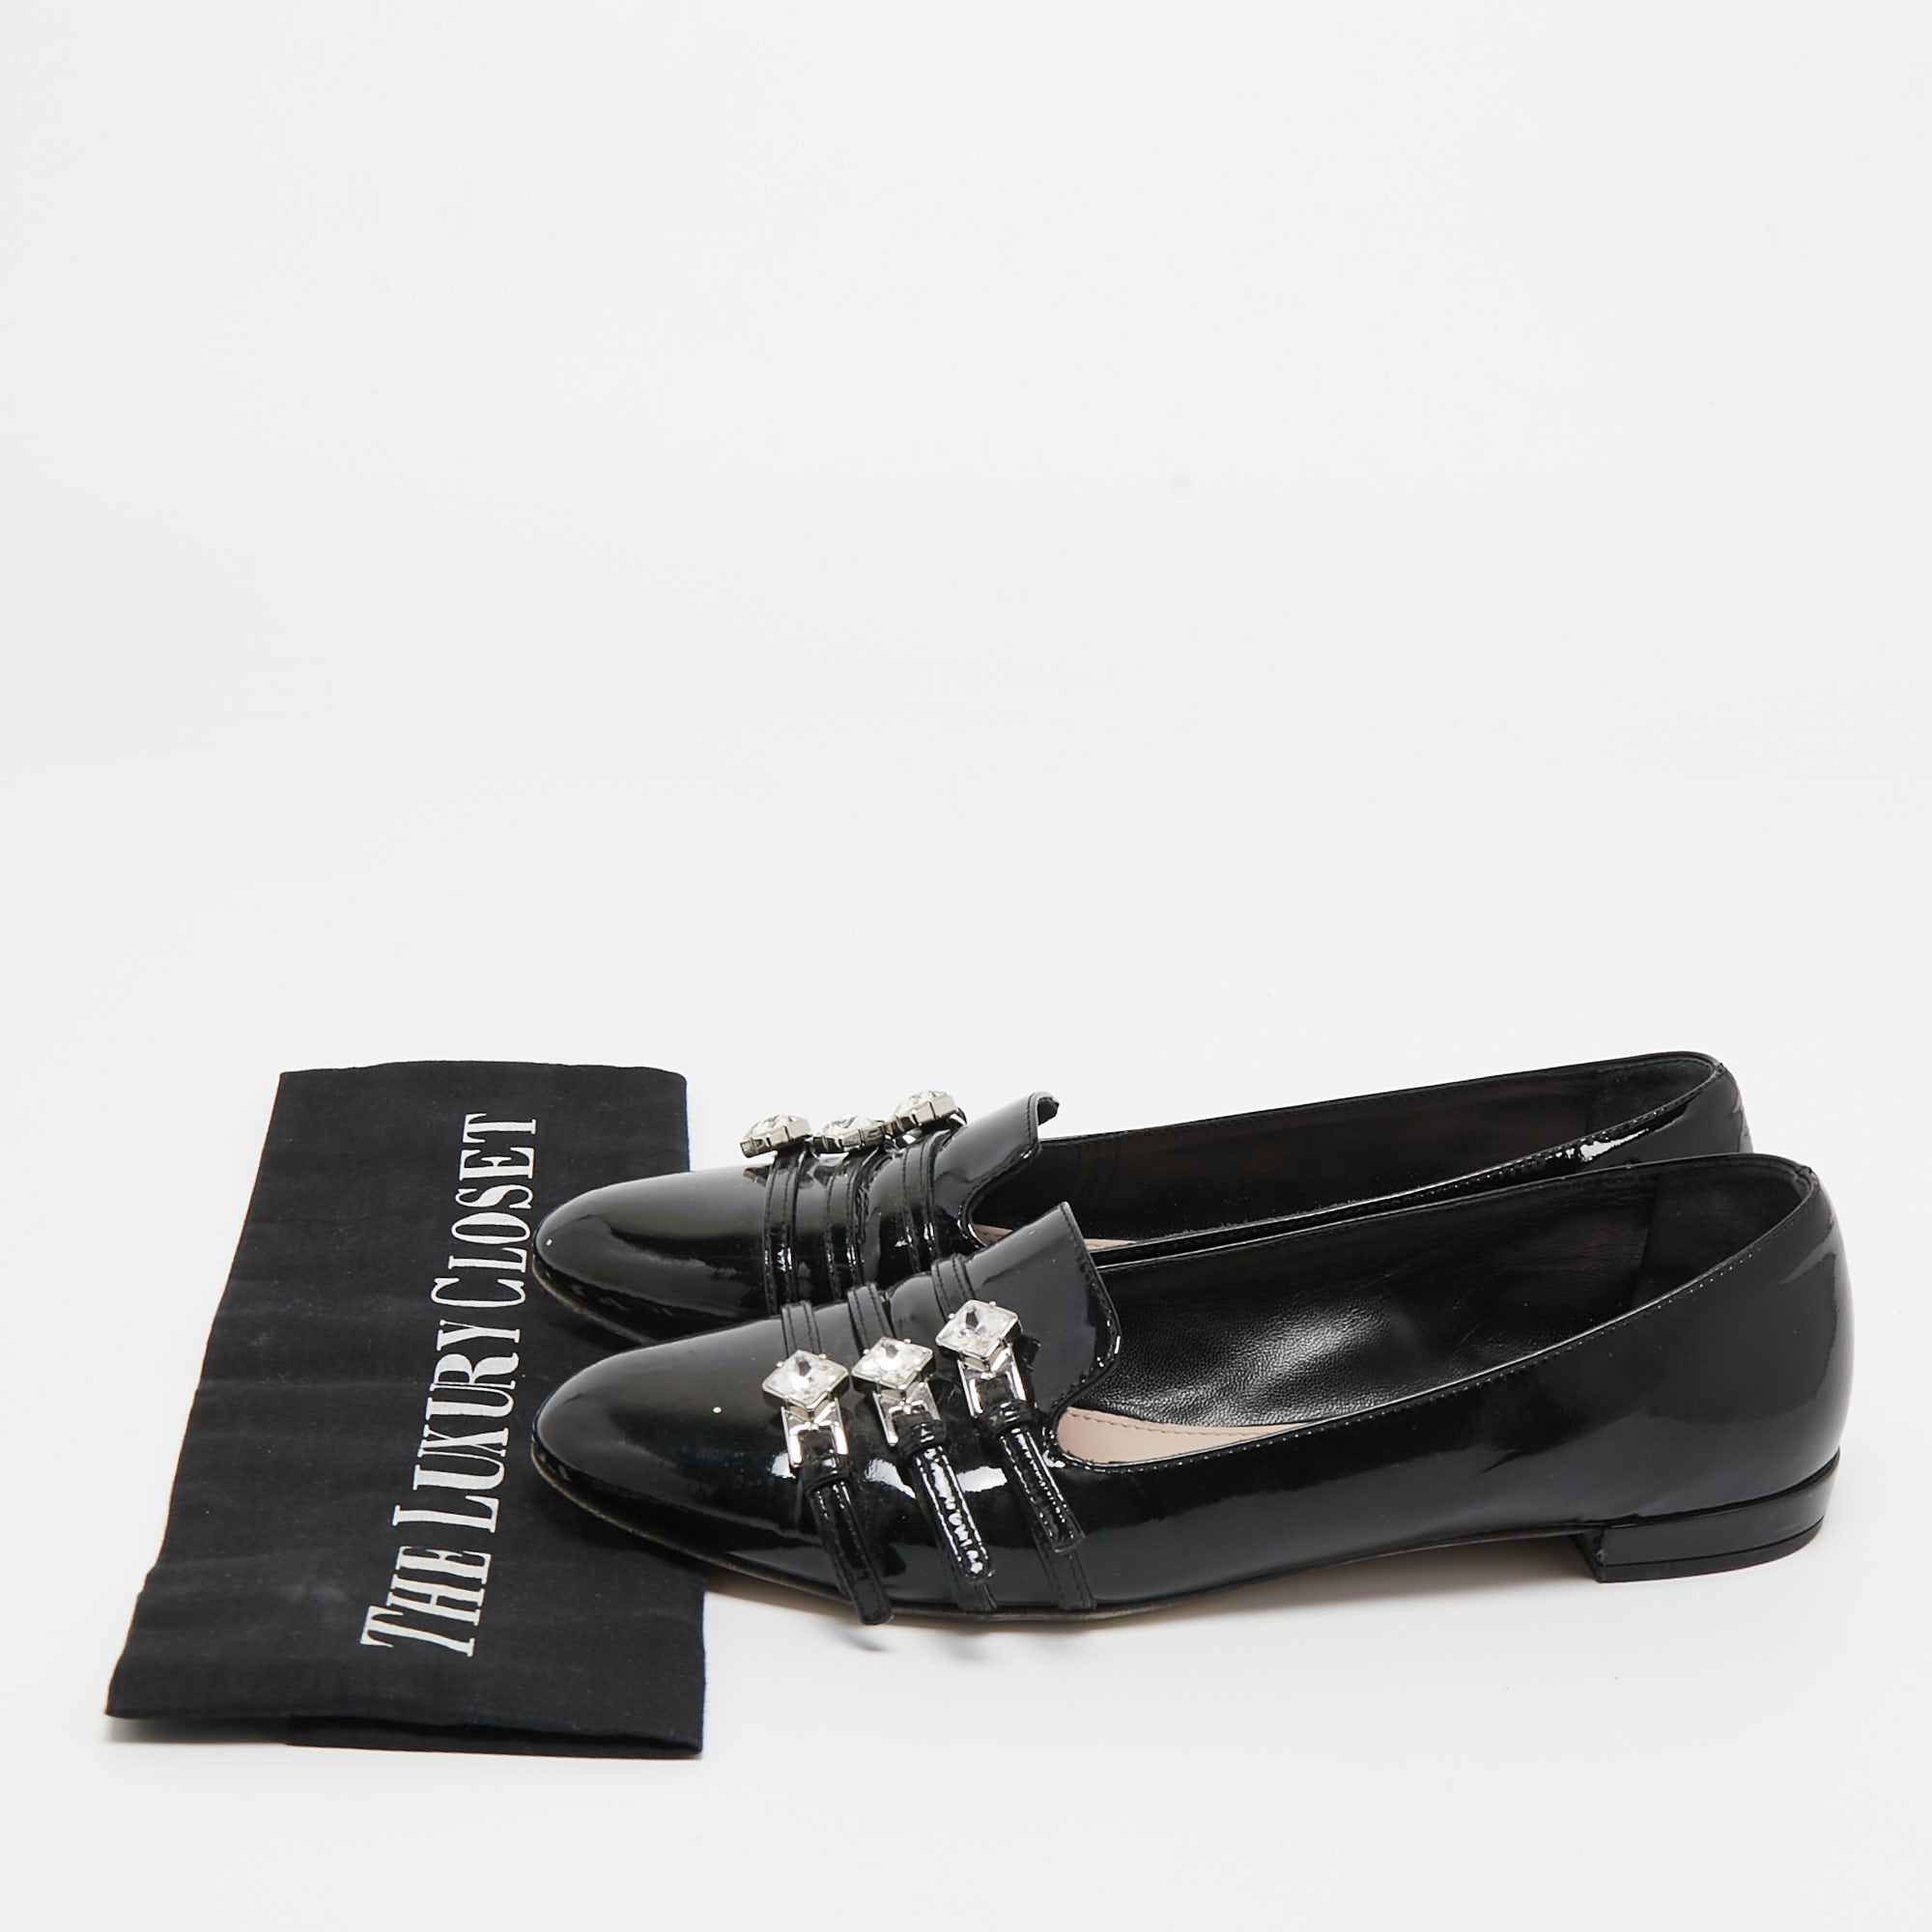 Miu Miu Black Patent Leather Trio Buckle Embellished Ballet Flats Size 36.5